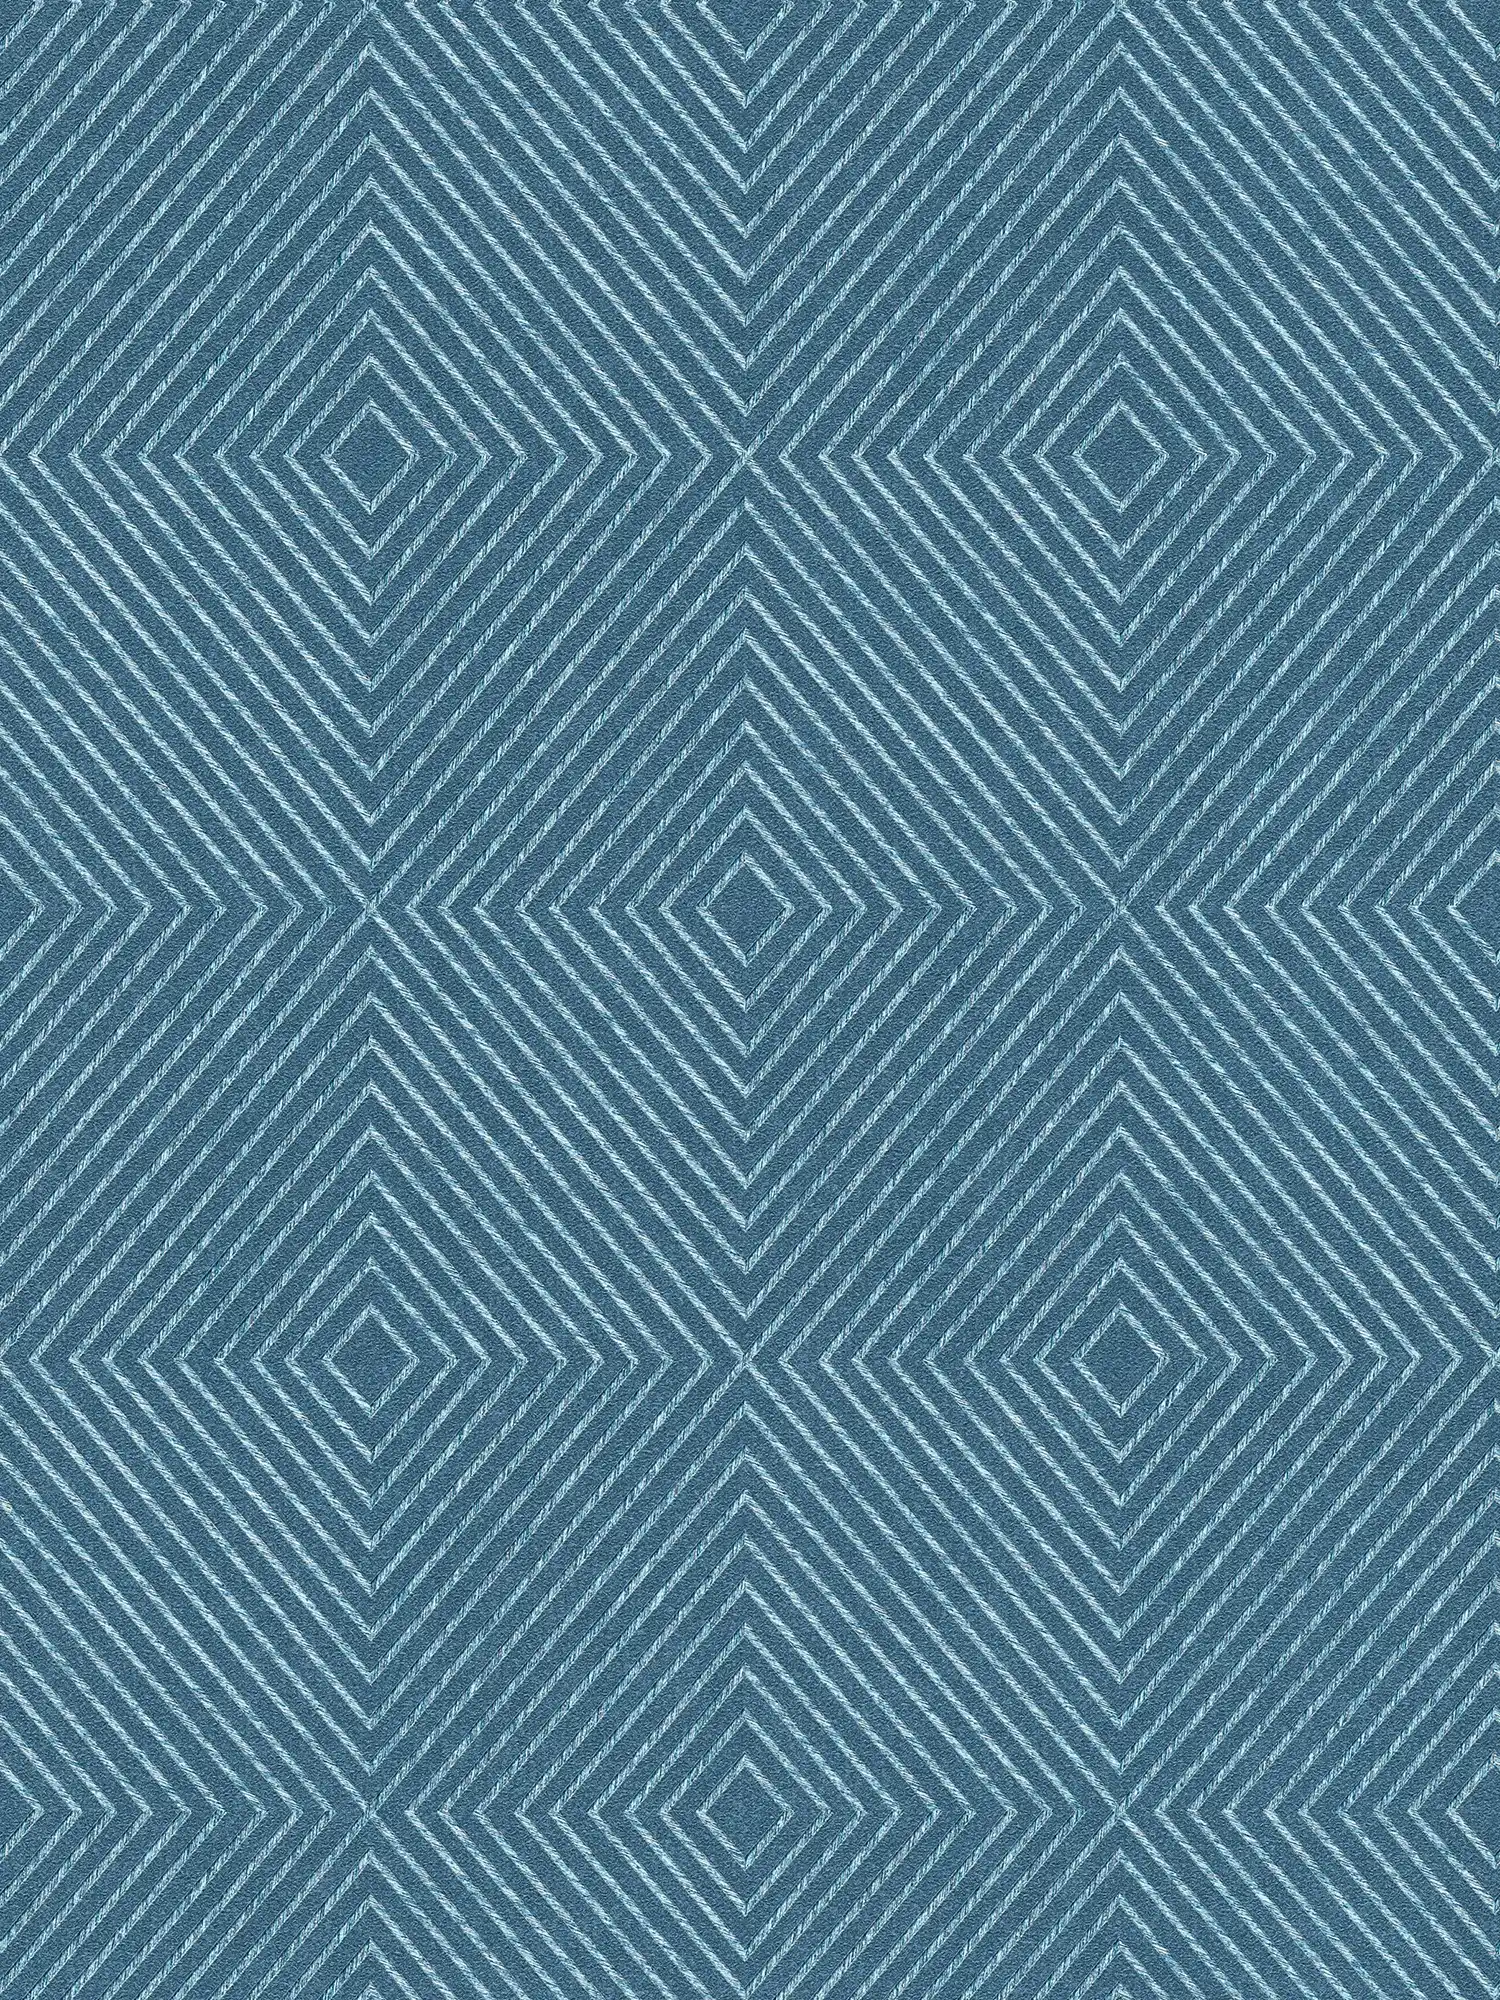 carta da parati design grafico, stile scandinavo - blu, argento
